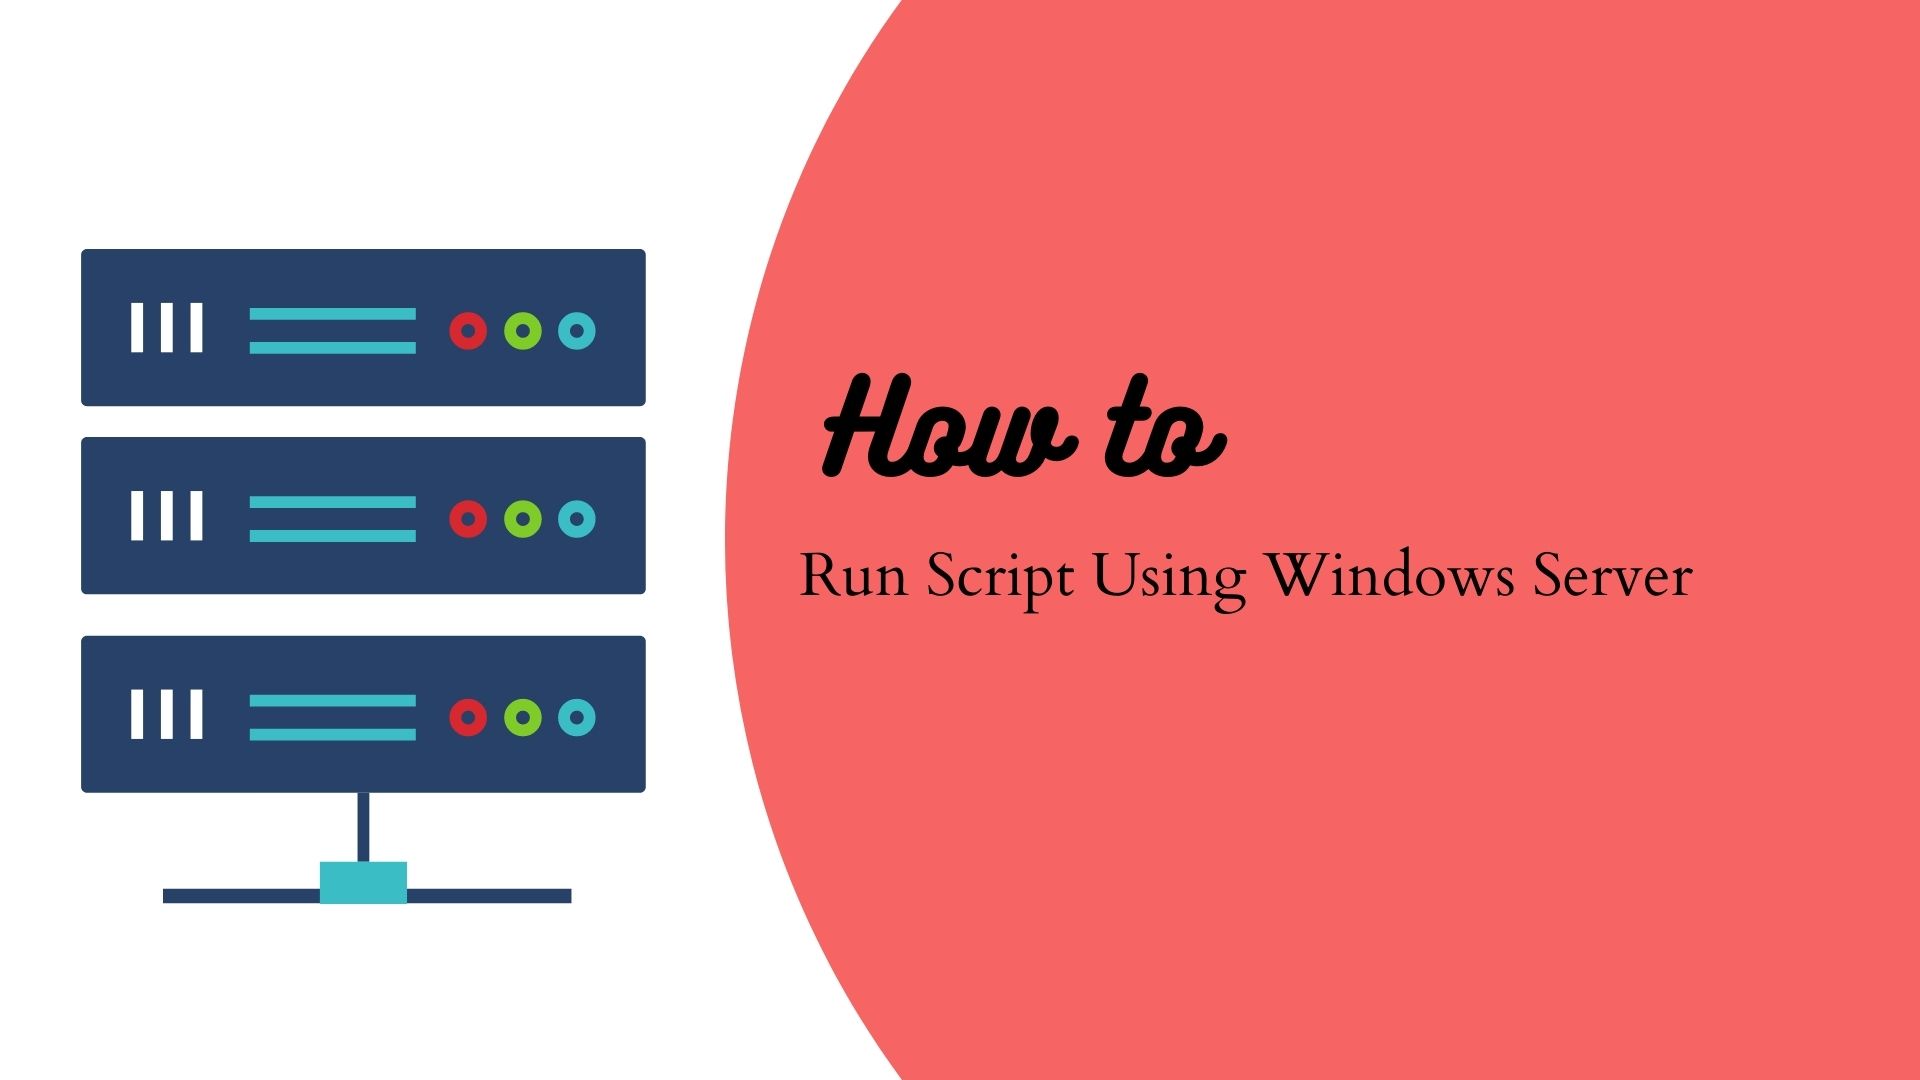 How to Run Script Using Windows Server